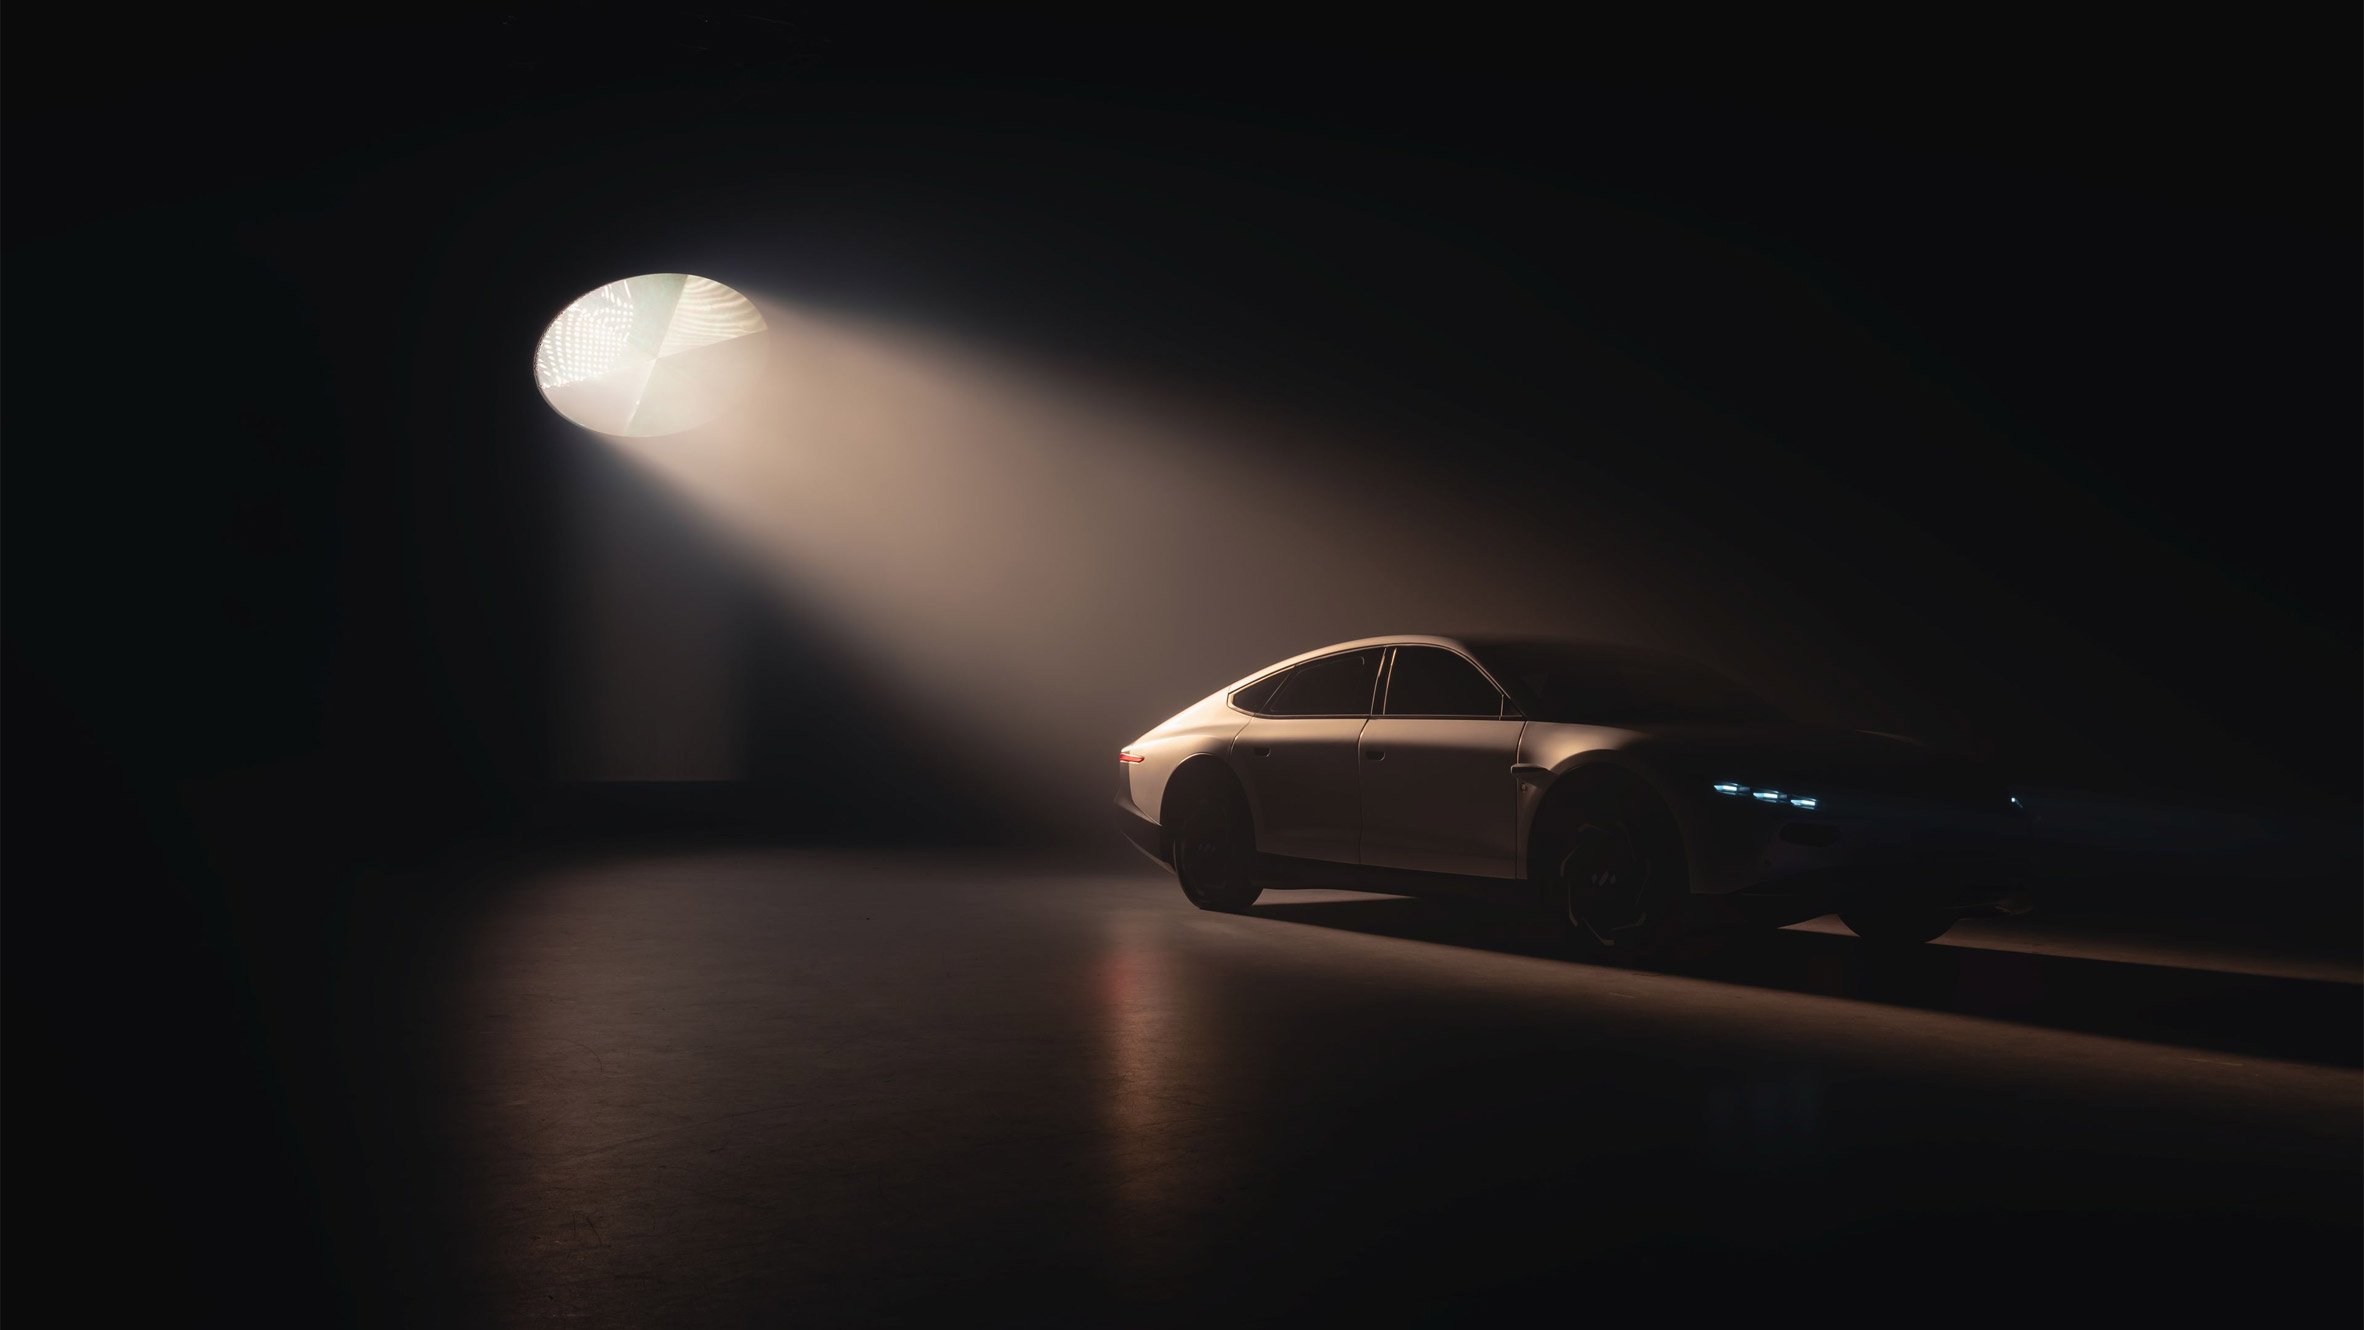 Lightyear 0 solar-powered car silhouetted against a black backdrop